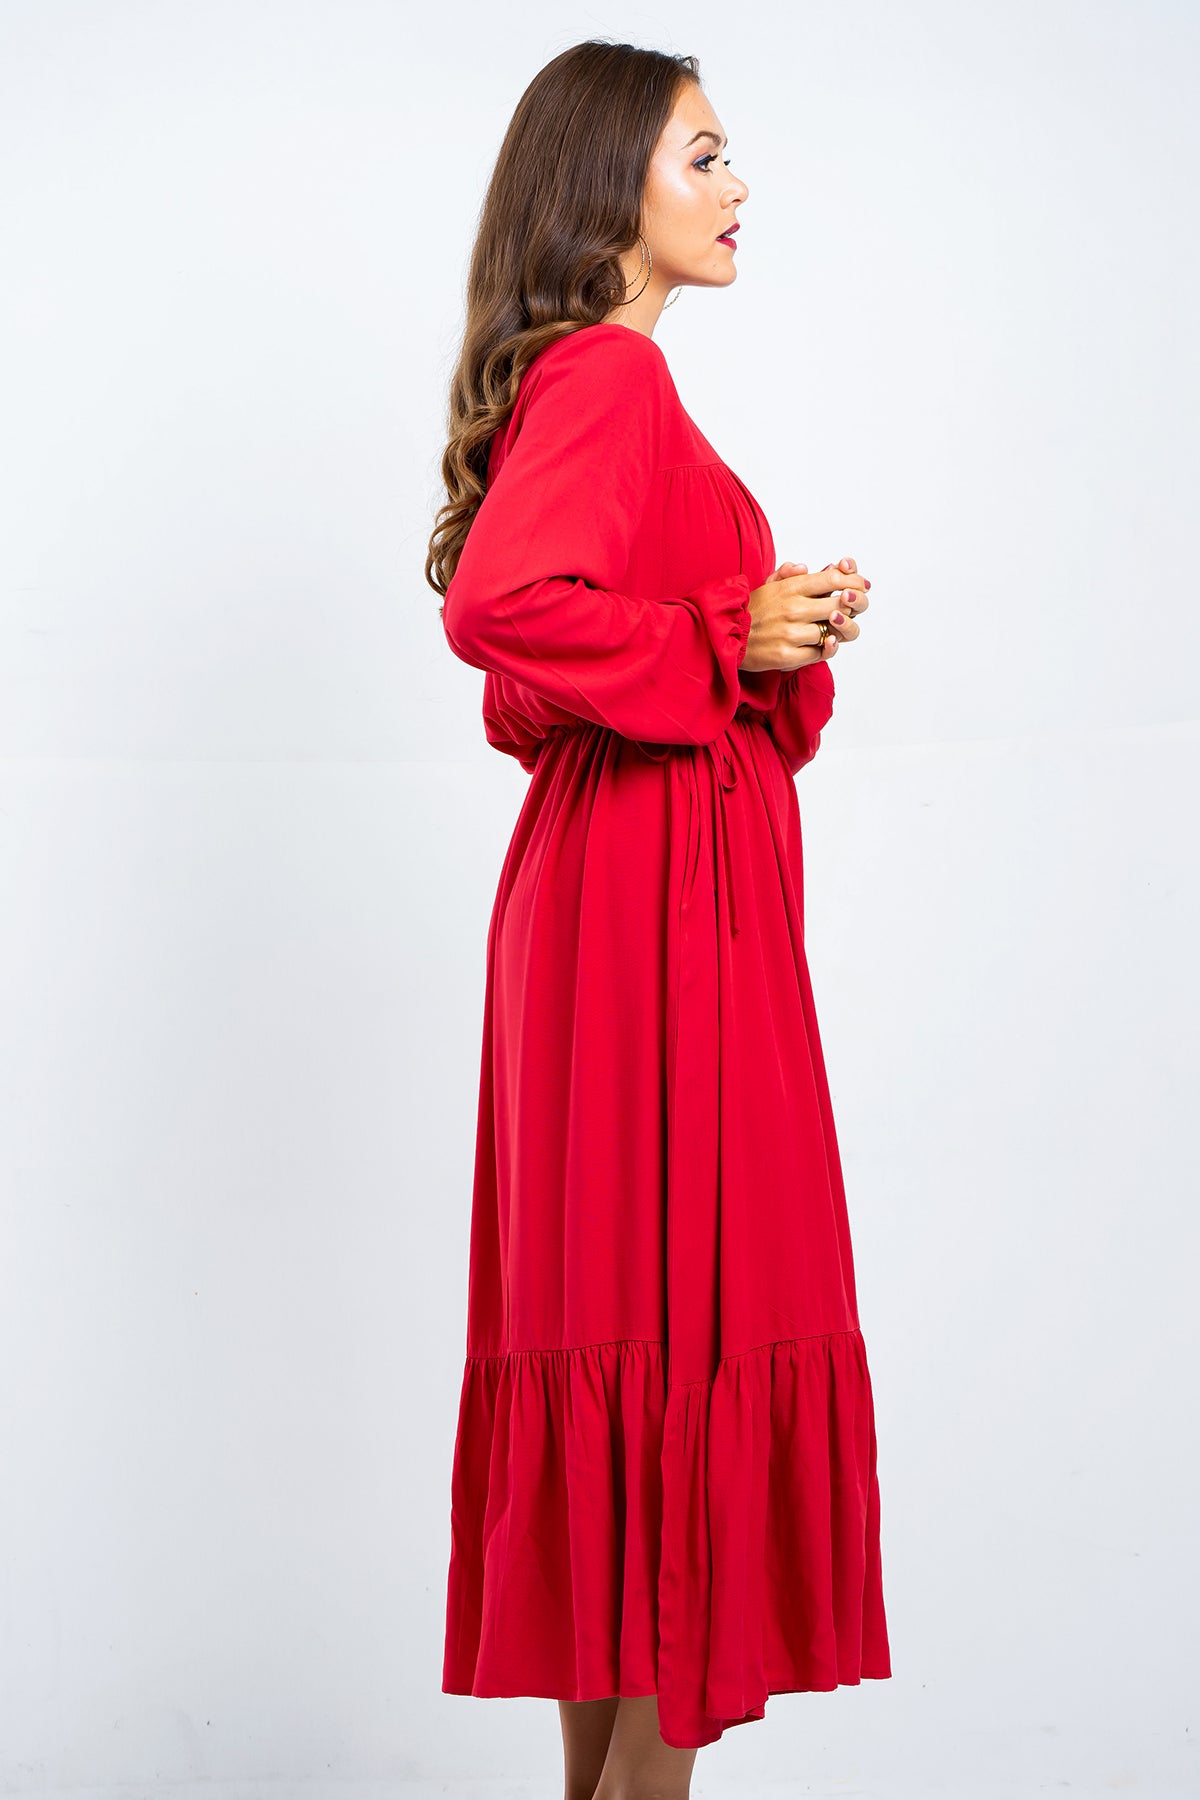 Hada Women's Long Sleeve Casual  Dress